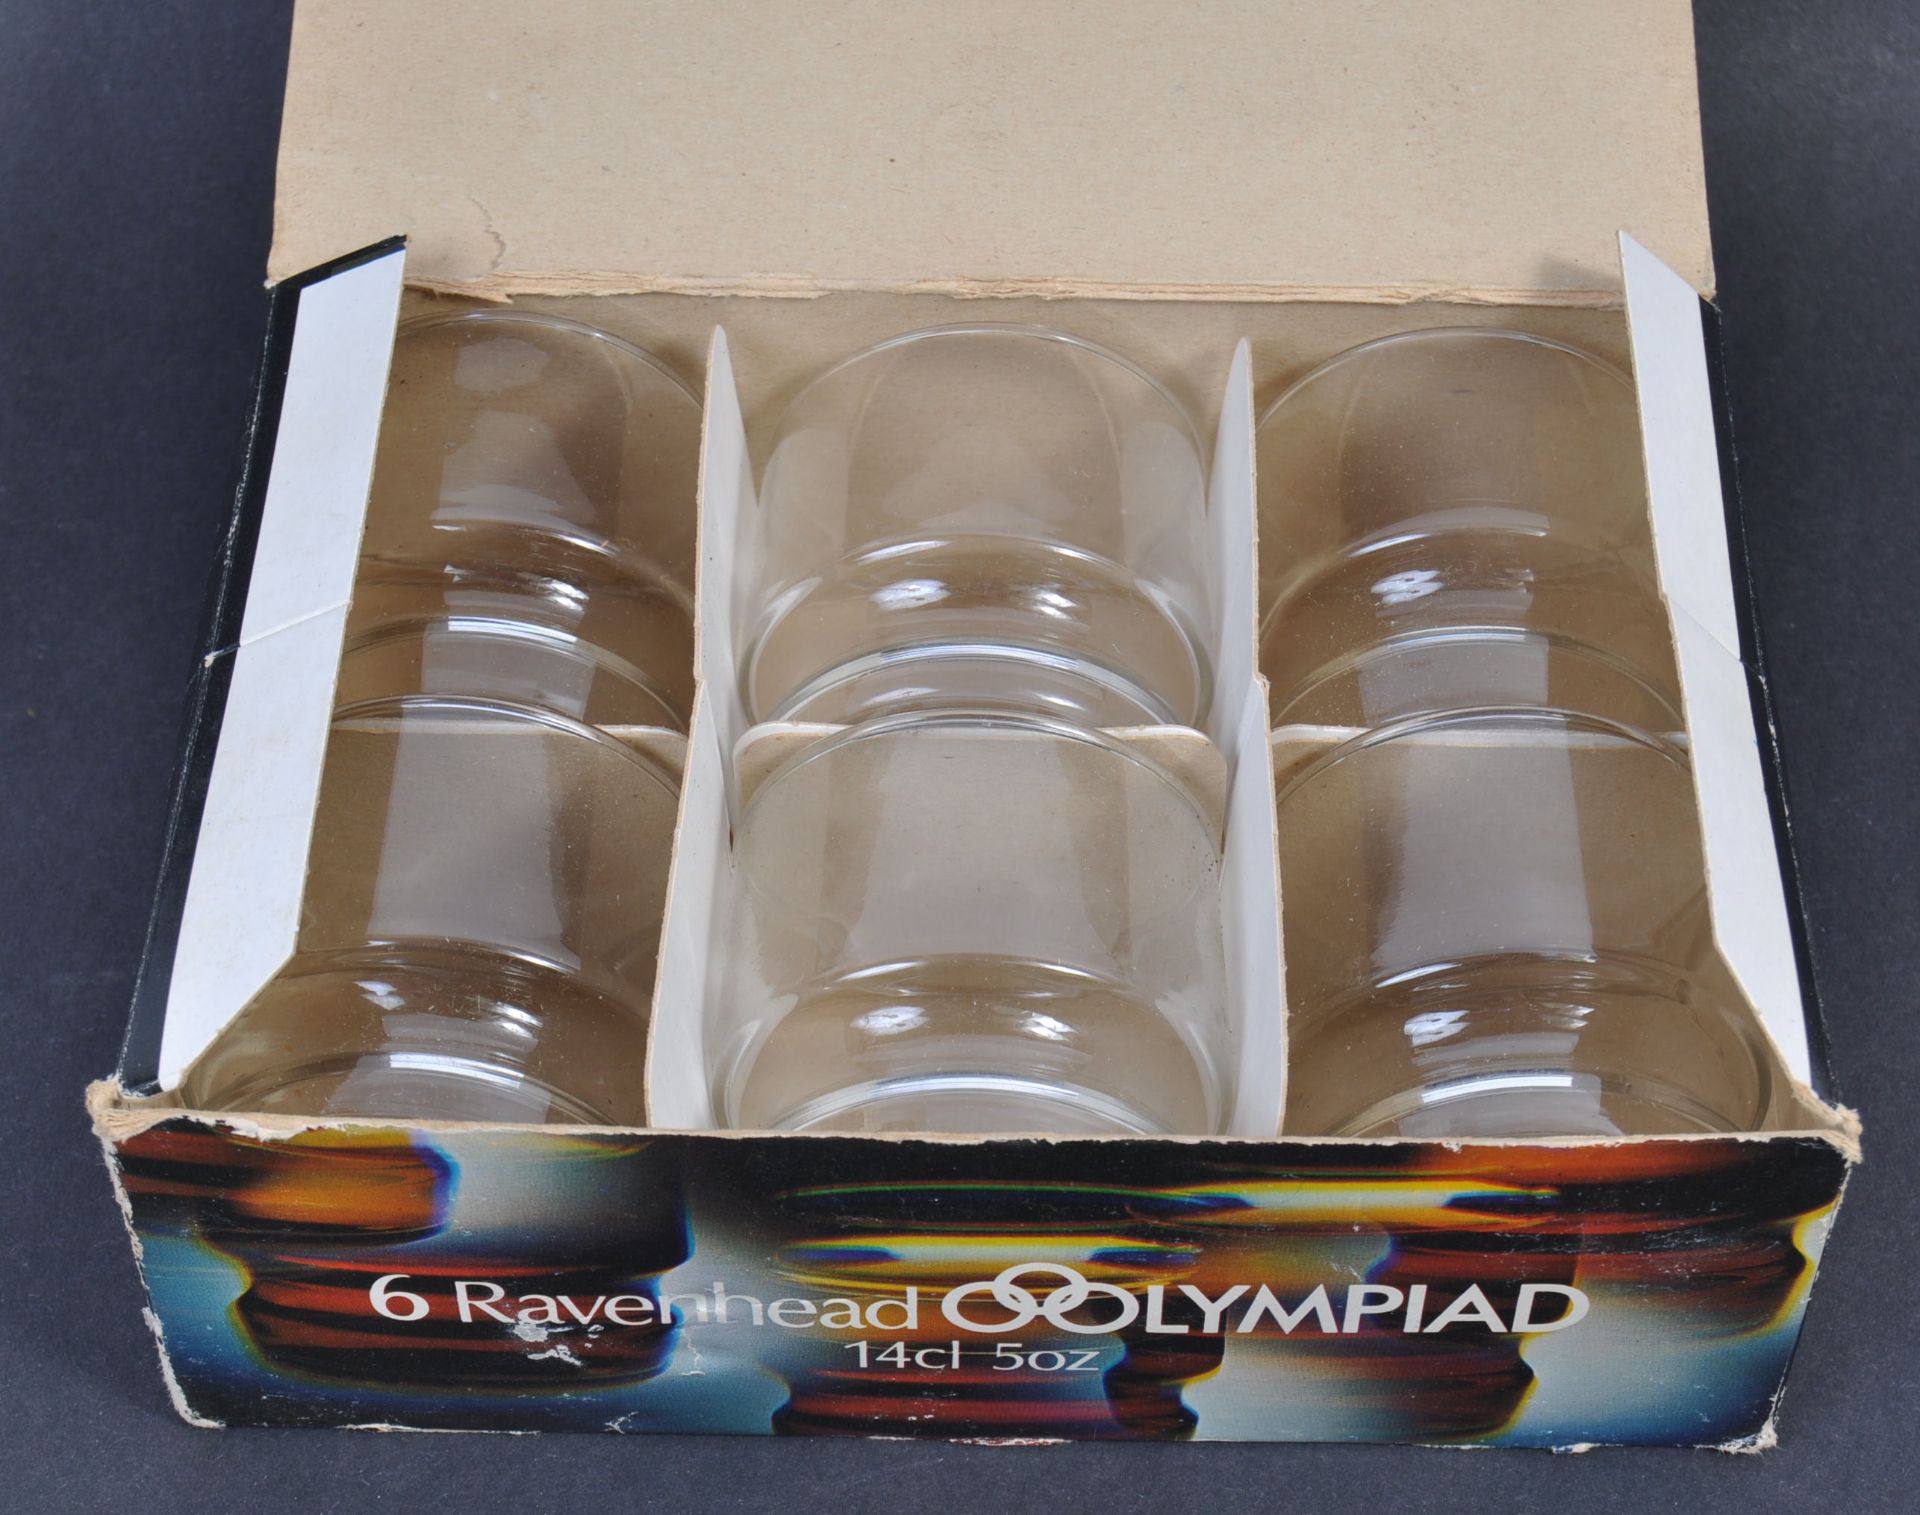 RAVENHEAD ENGLAND - SET OF 6 OLYMPIAD PATTERN DRINKING TUMBLERS - Image 6 of 6